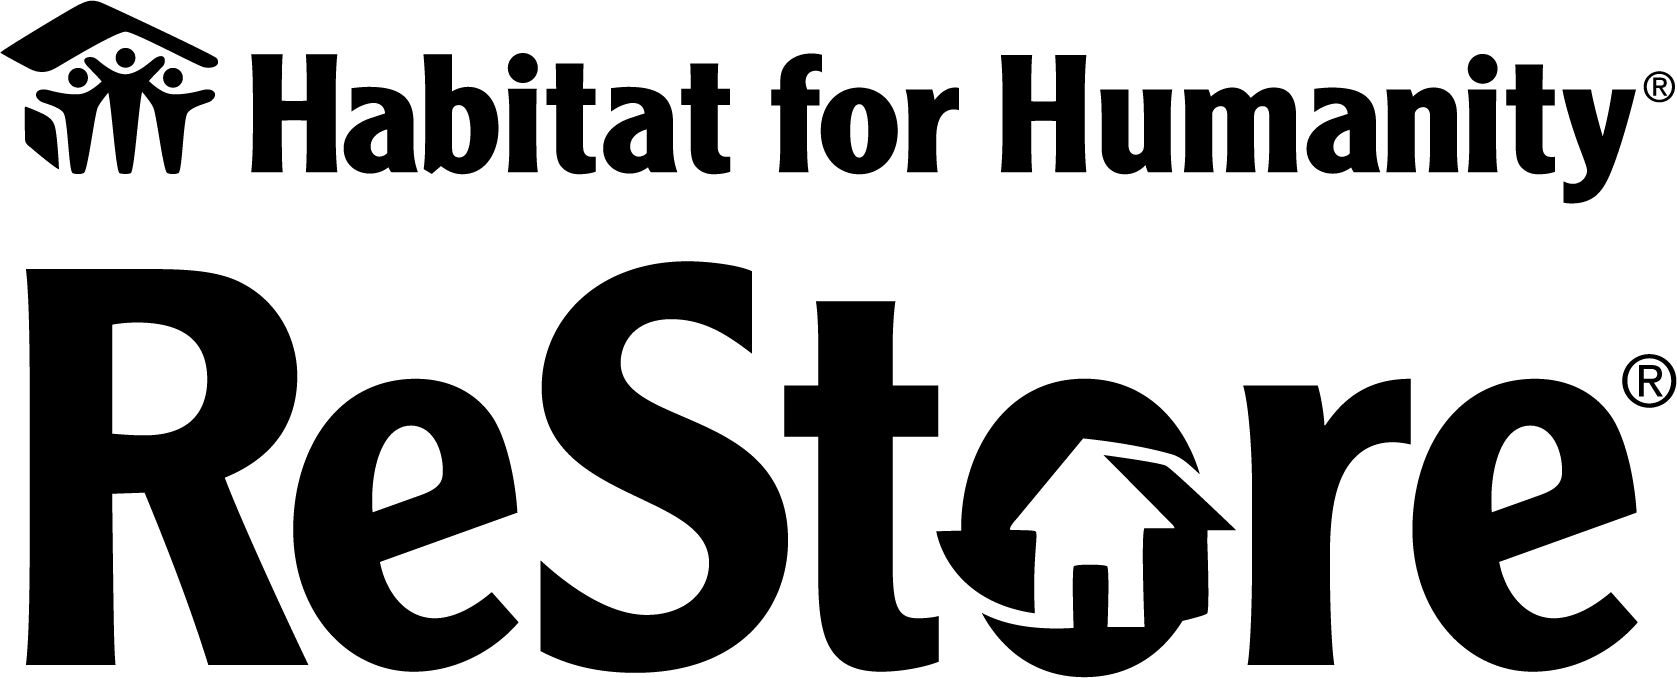 Habitat for Humanity, ReStore